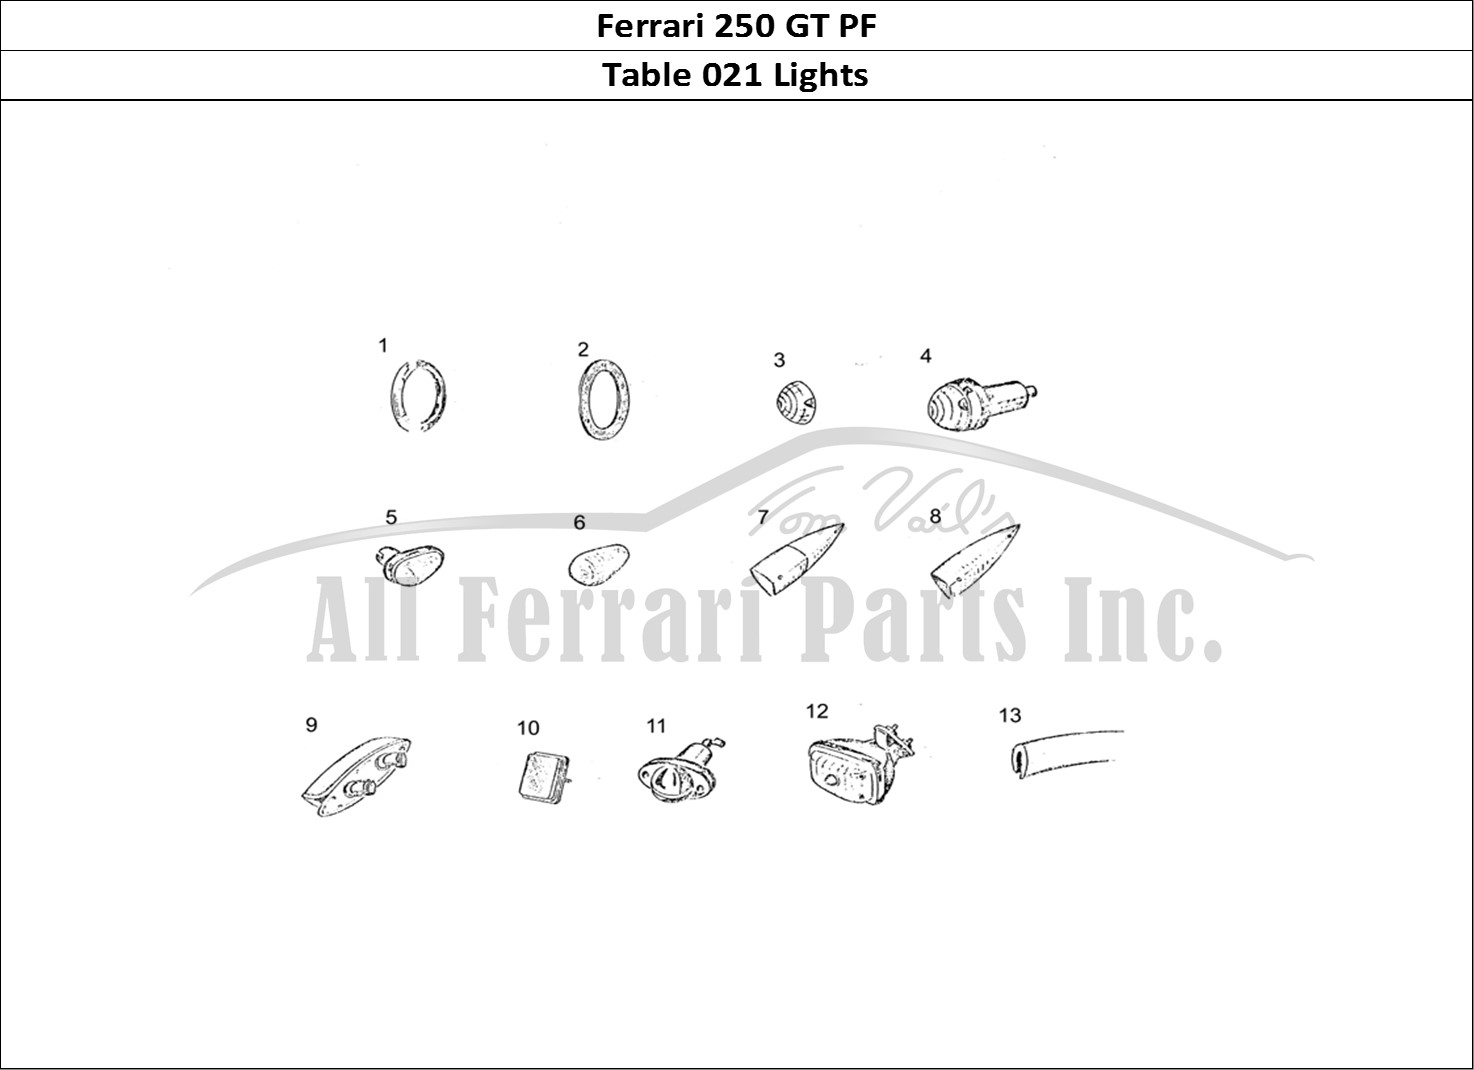 Ferrari Parts Ferrari 250 GT (Coachwork) Page 021 Lights